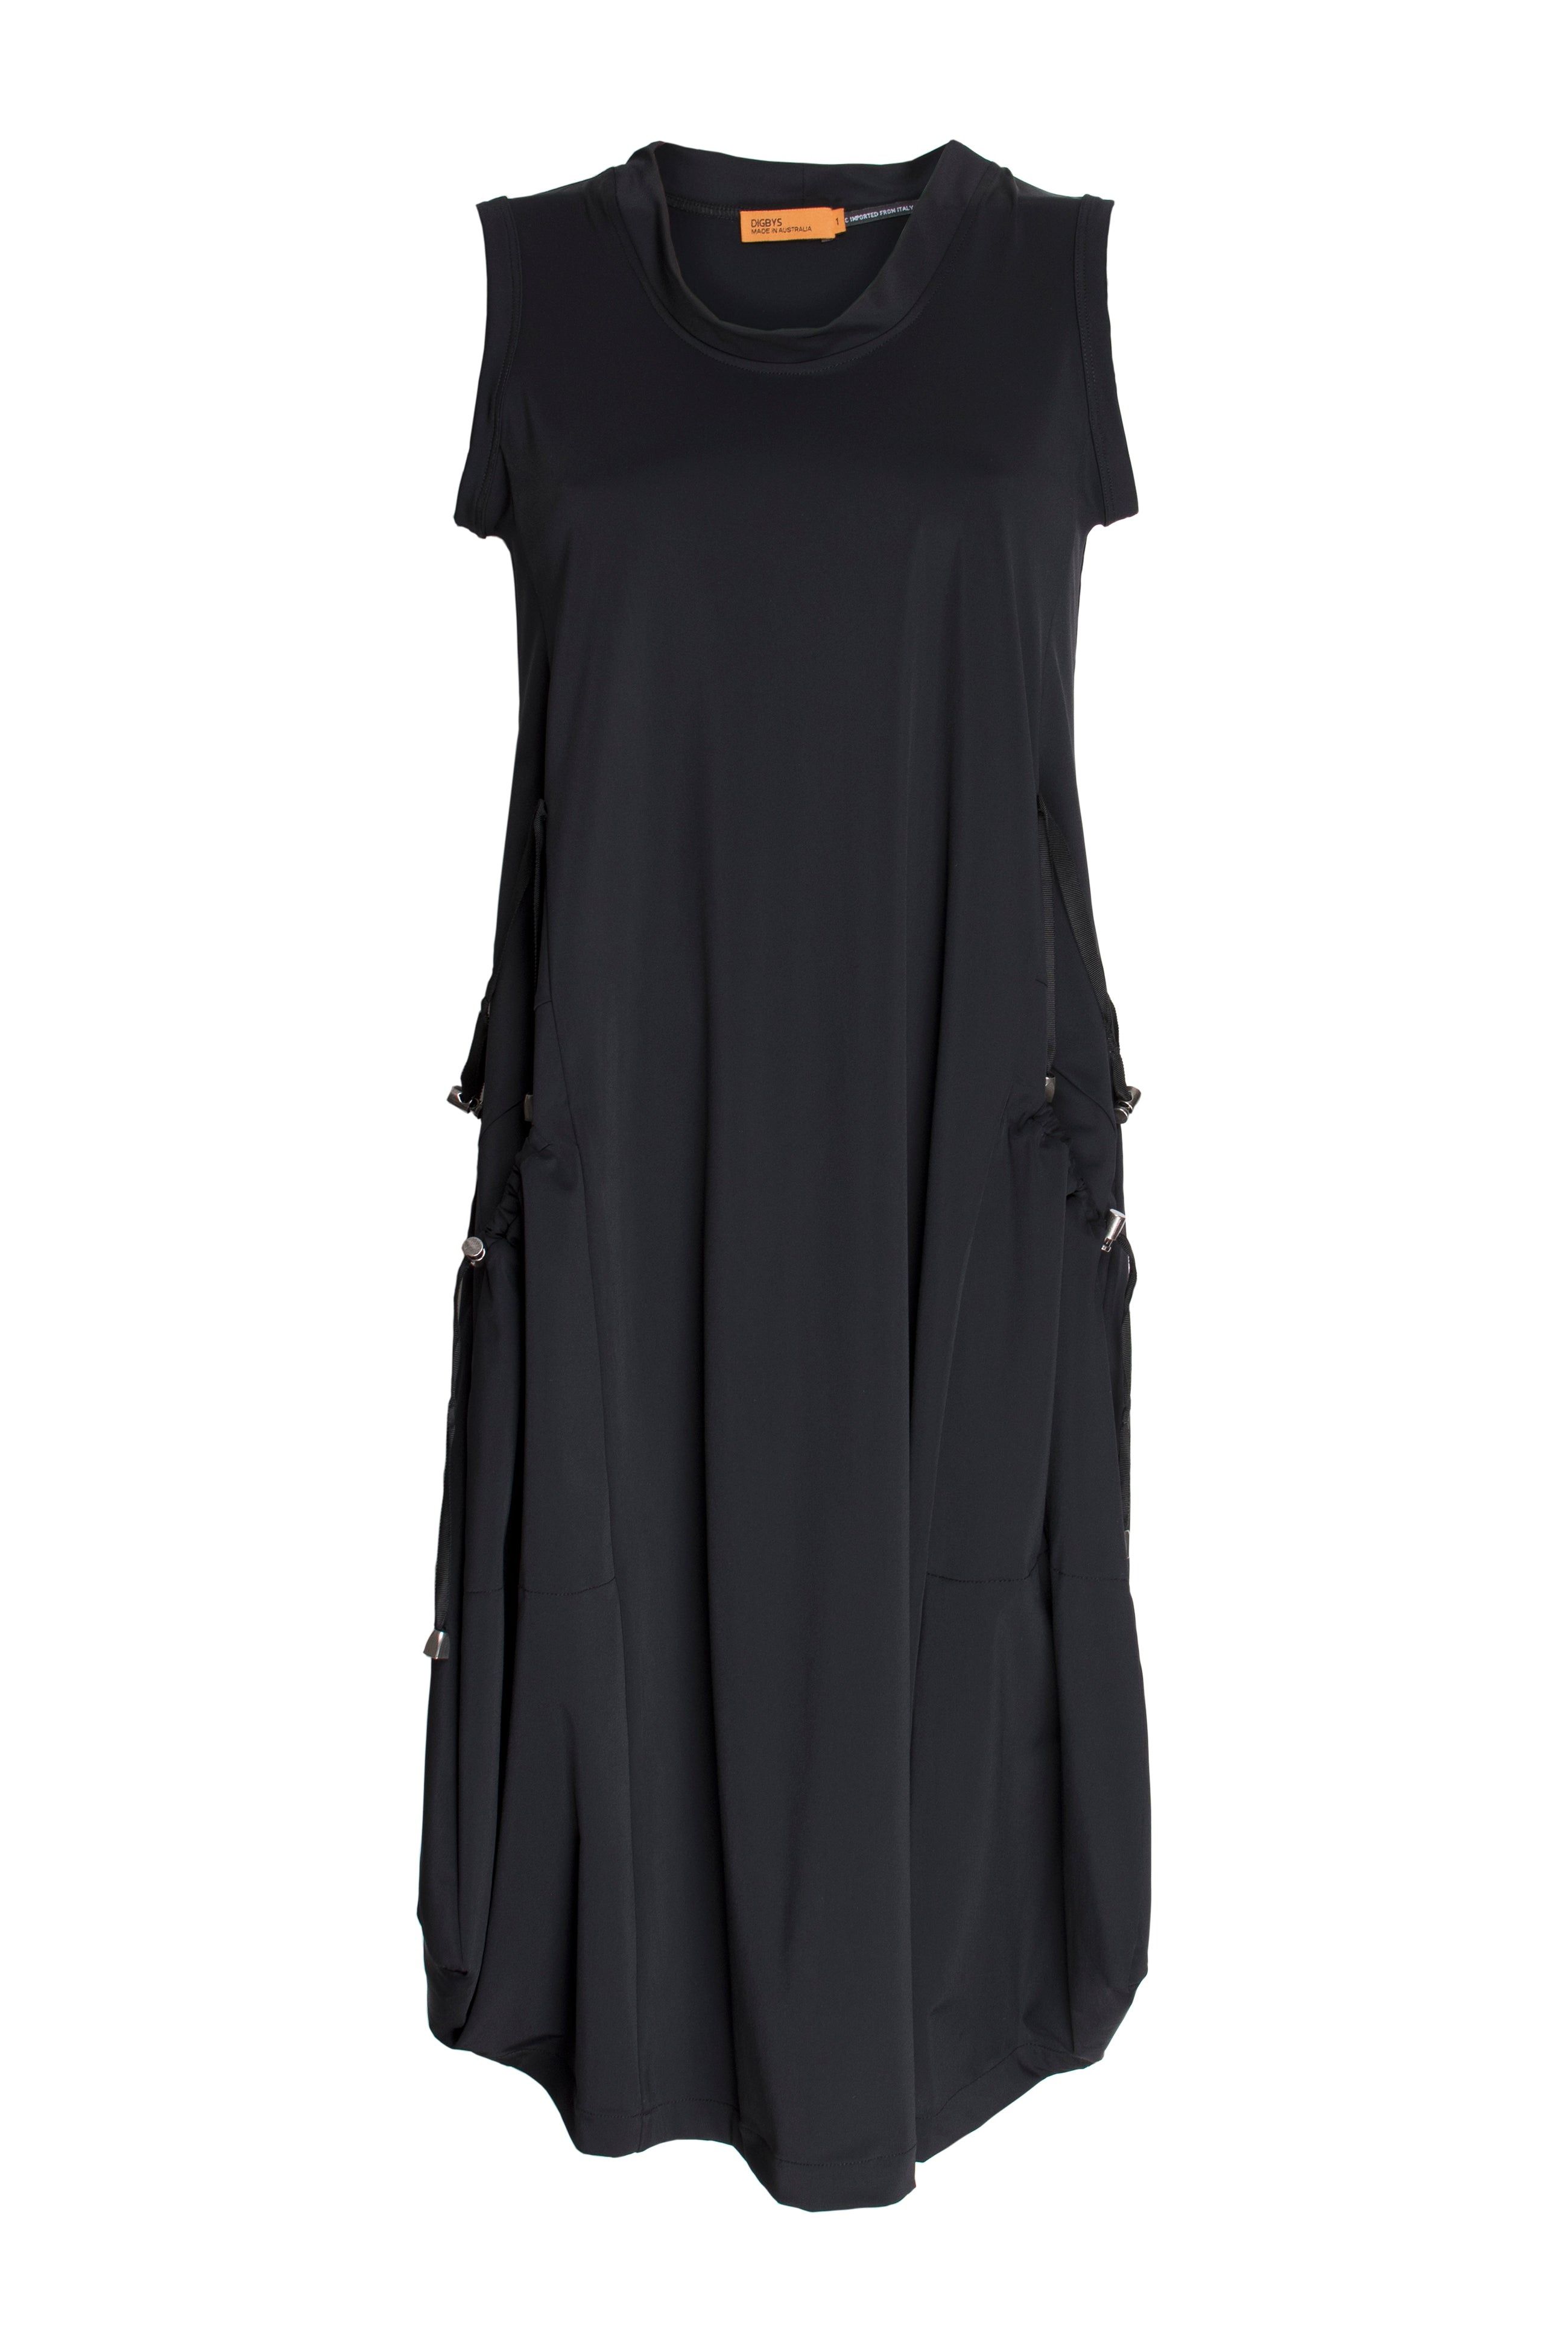 Sleeveless Drawstring Dress - Black Jersey 4217